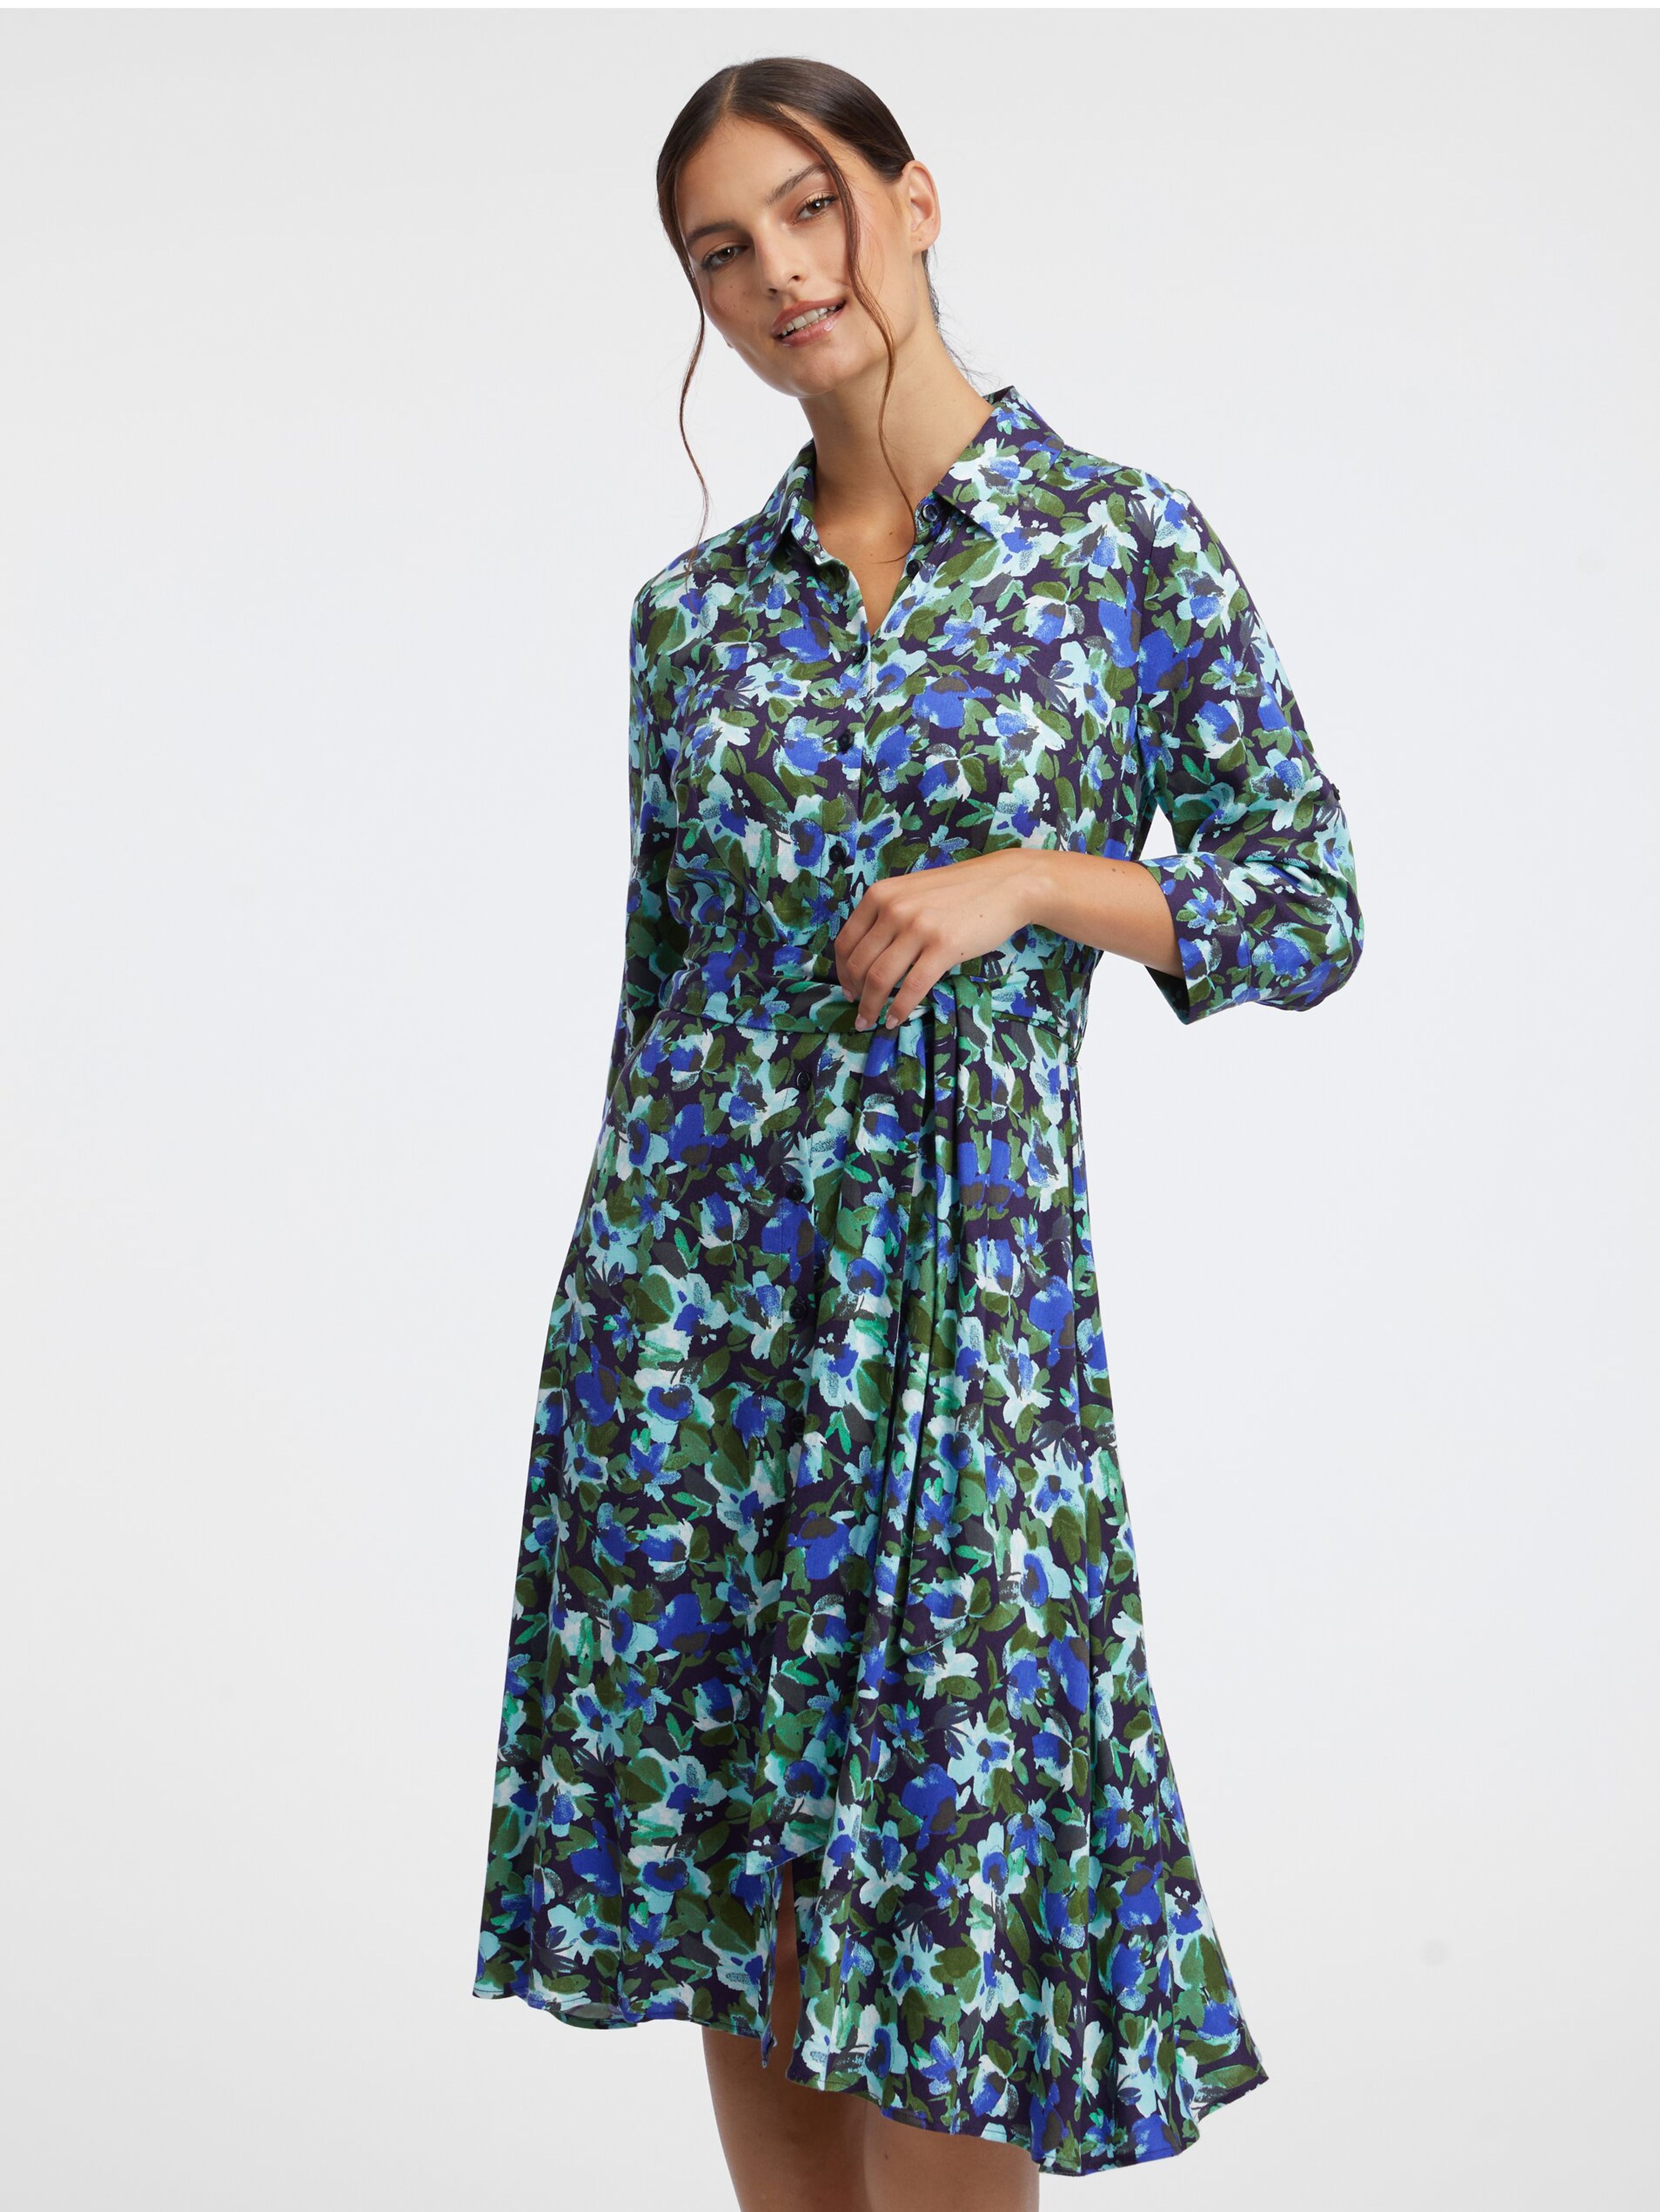 Grünes und blaues geblümtes Hemdblusenkleid Damen ORSAY